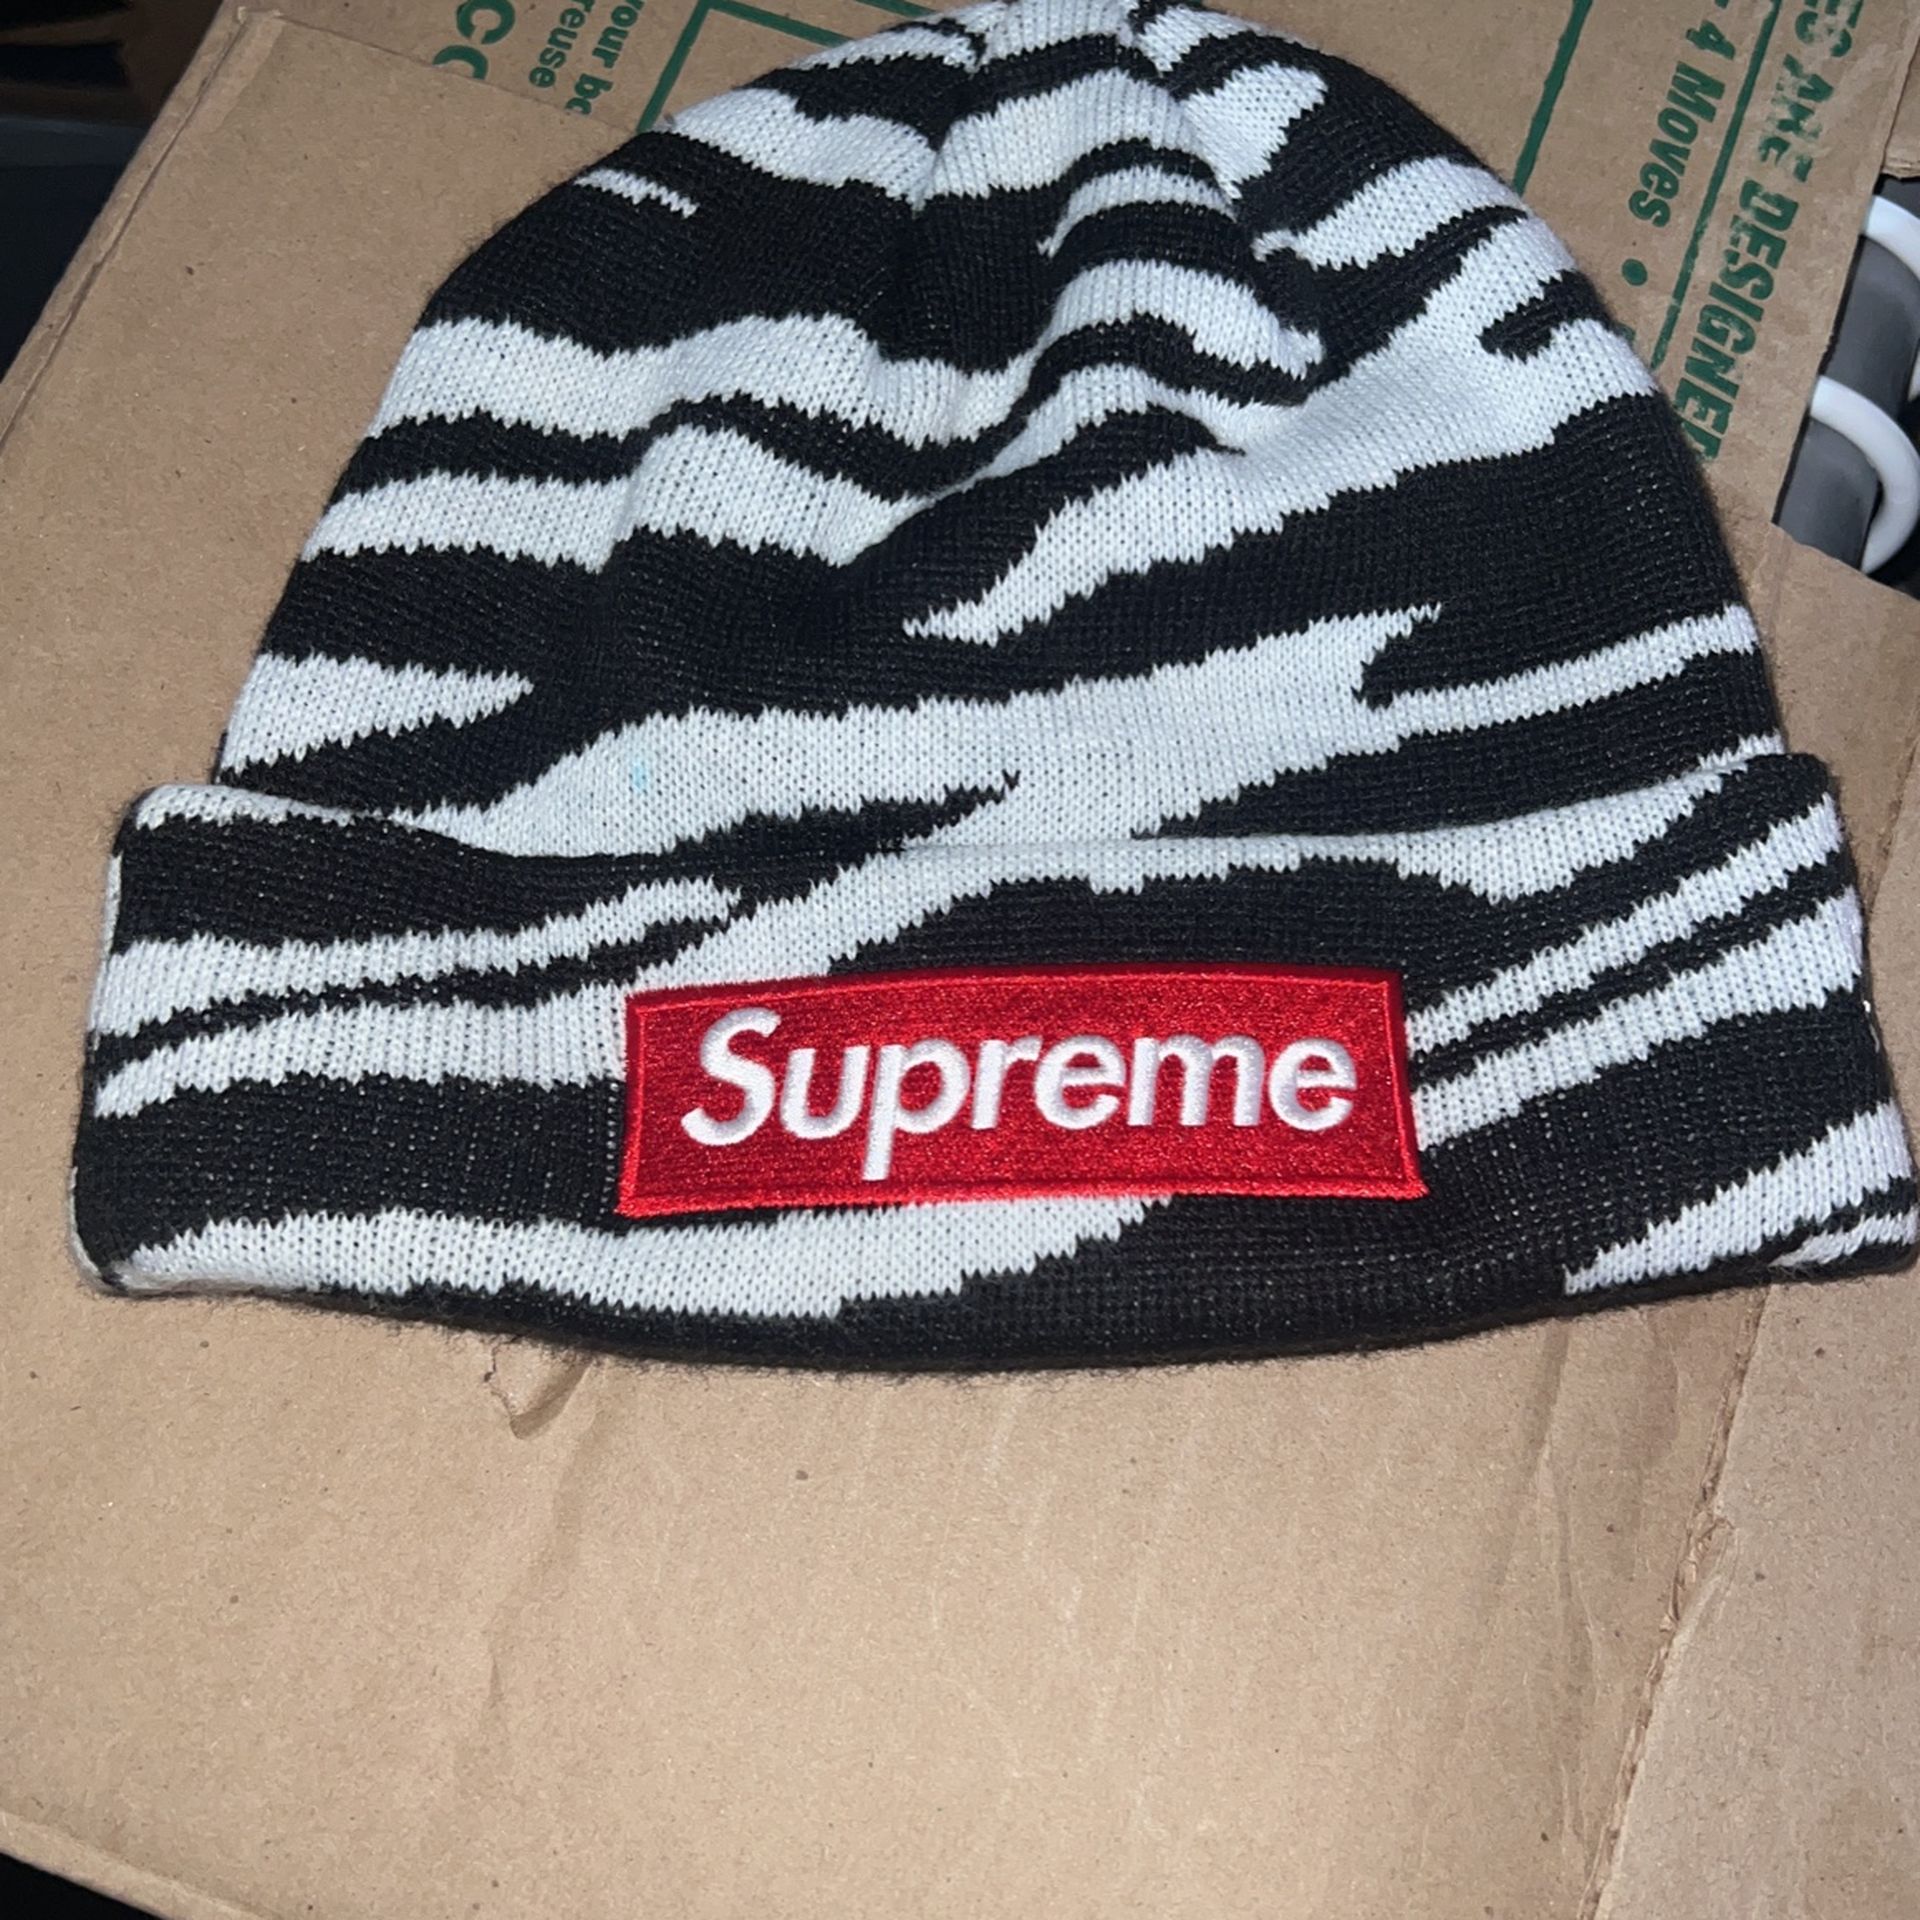 Supreme Zebra Hat